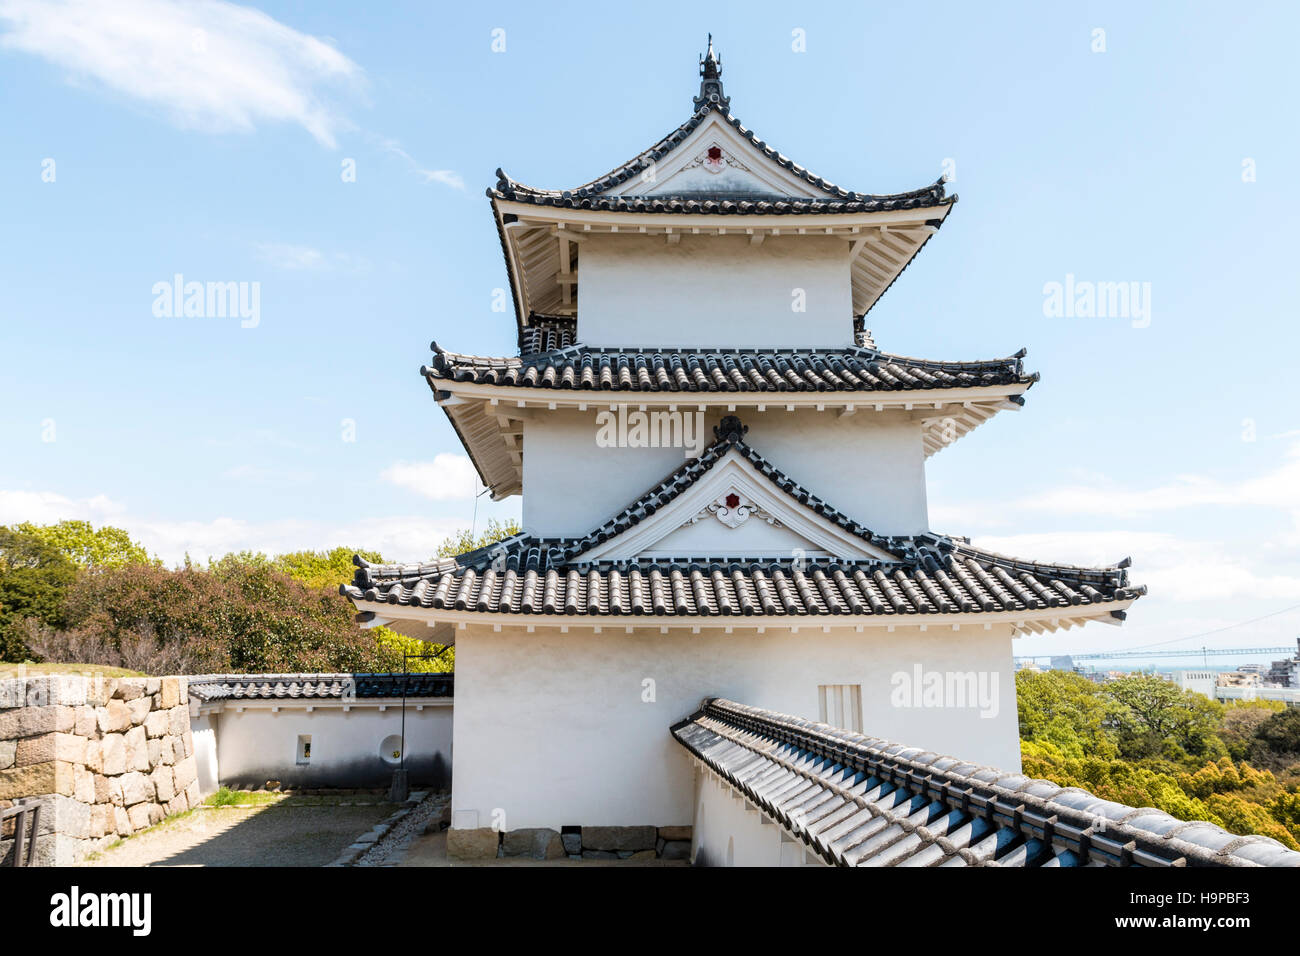 Japón Akashi castillo, AKA Kishun-jo. Shikuri pared de yeso blanco que conduce a la 3 historia Tatsumi yagura, torreta. Blue Sky. Antecedentes del Puente Akashi. Foto de stock